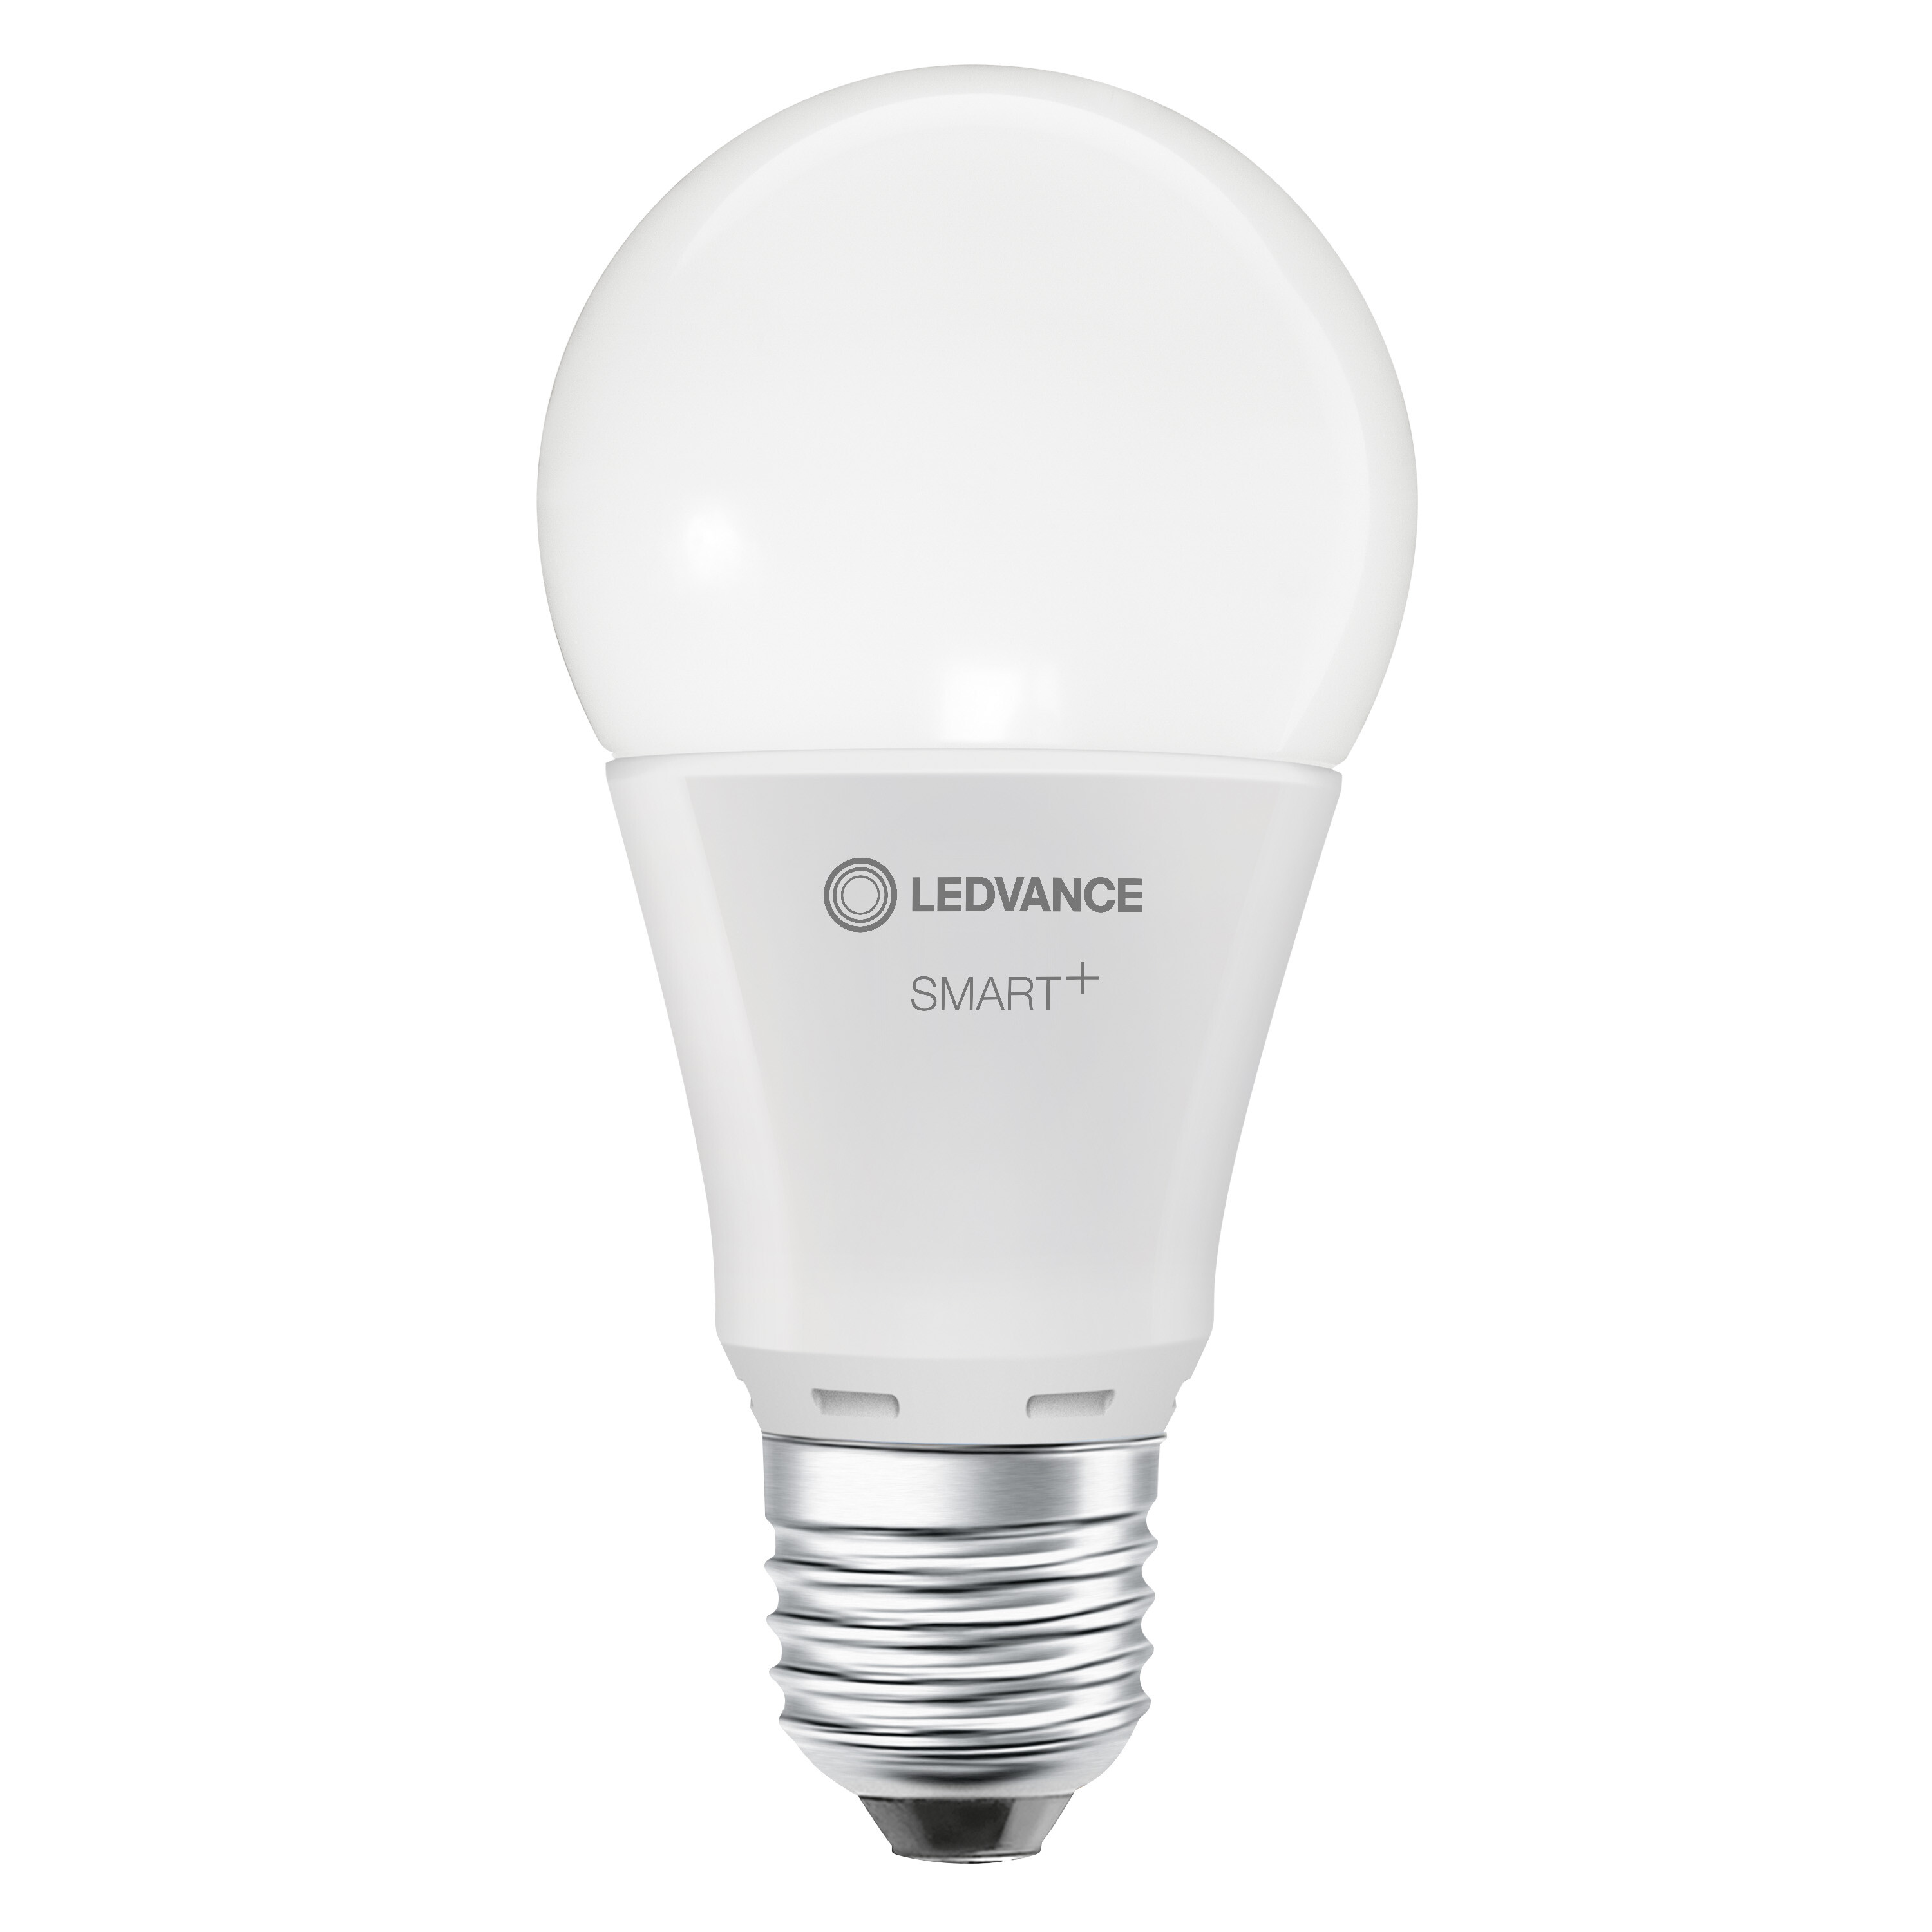 Classic Lampe WiFi Lichtfarbe LED LEDVANCE SMART+ Tunable änderbar White